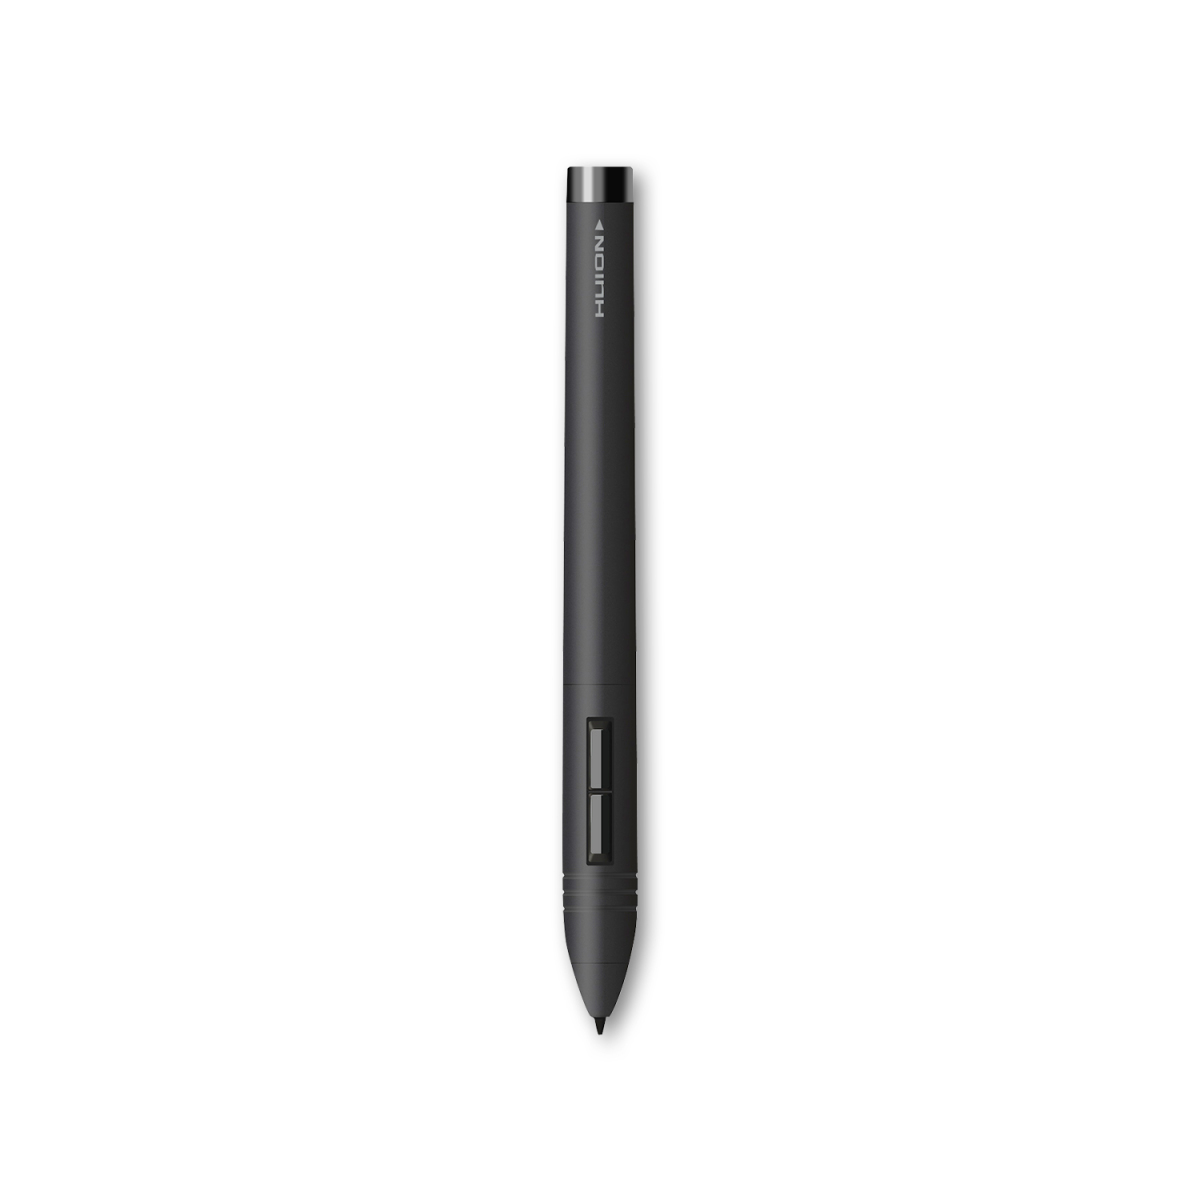 Huion Rechargeable Pen P80 For Pen Tablets Huion Official Store Drawing Tablets Pen Tablets Pen Display Led Light Pad